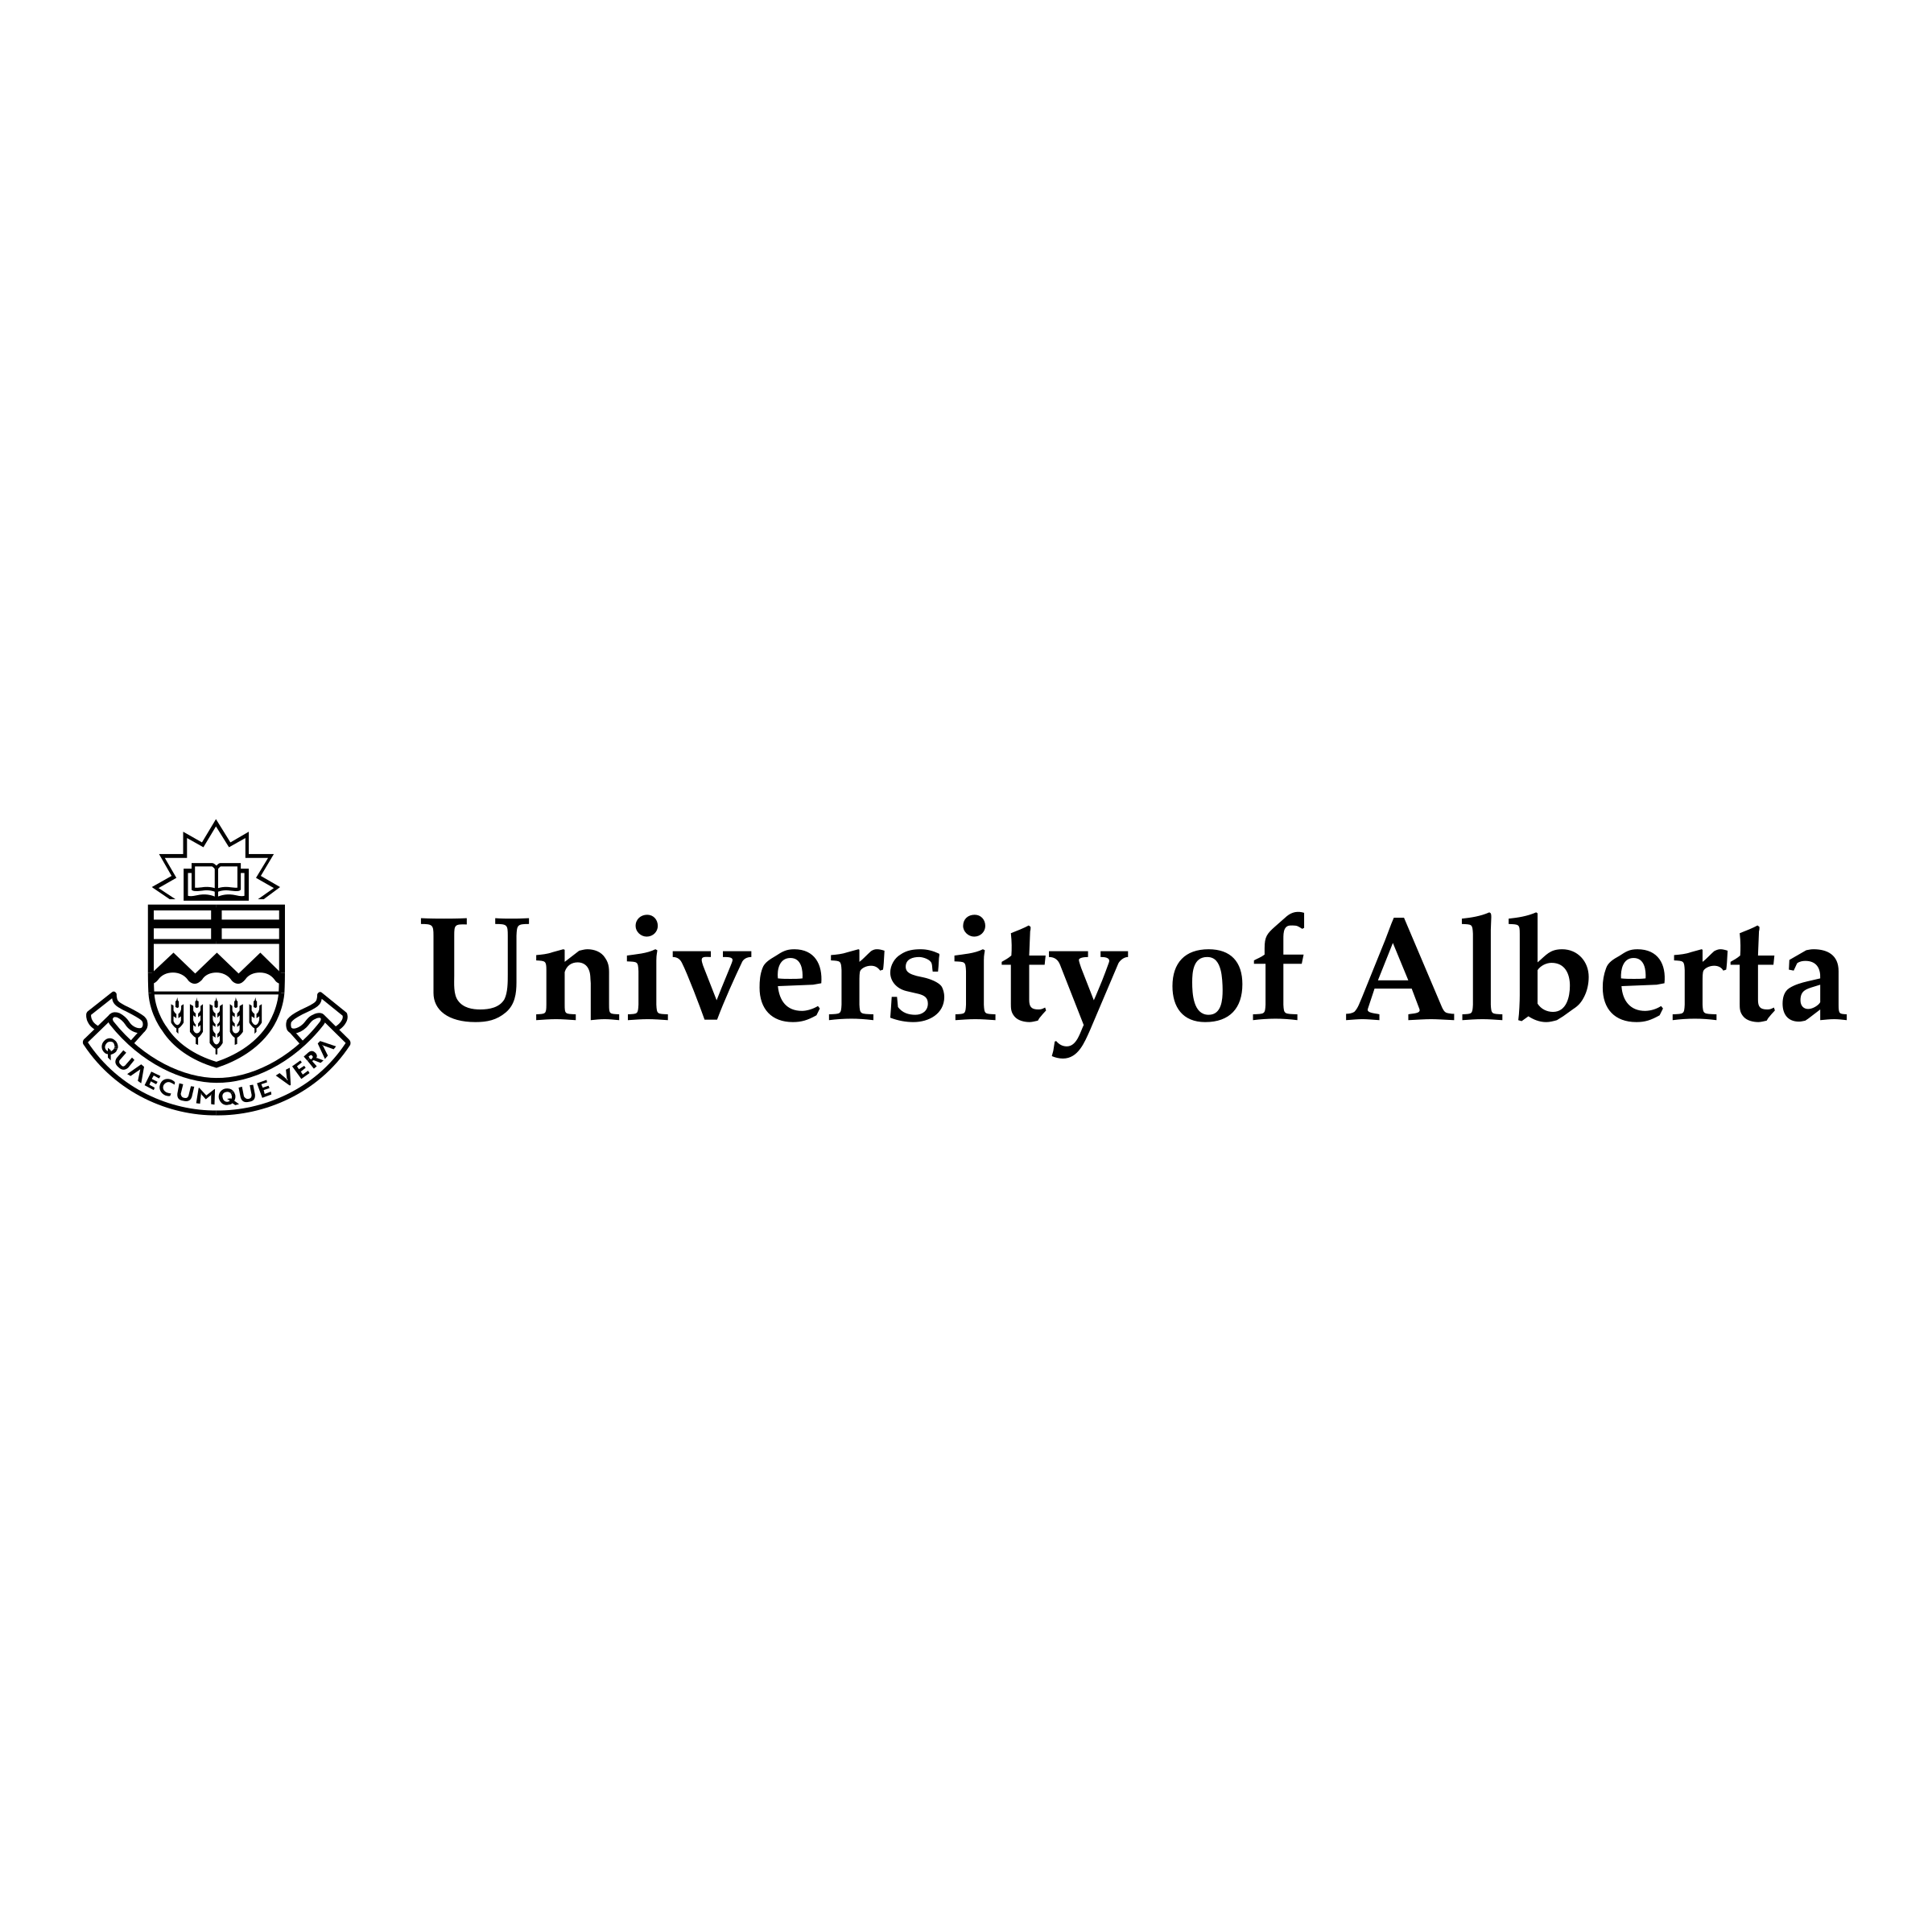 University of Alberta Logo - University of Alberta Logo PNG Transparent & SVG Vector - Freebie Supply